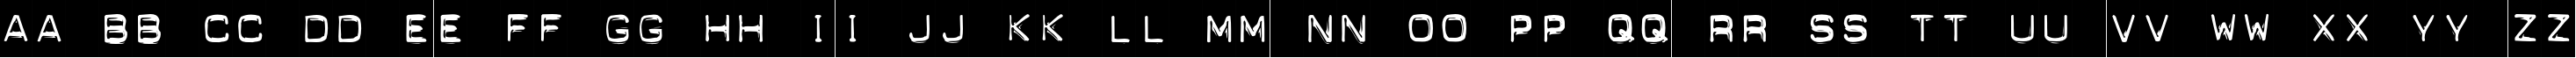 Пример написания английского алфавита шрифтом DynamoeC